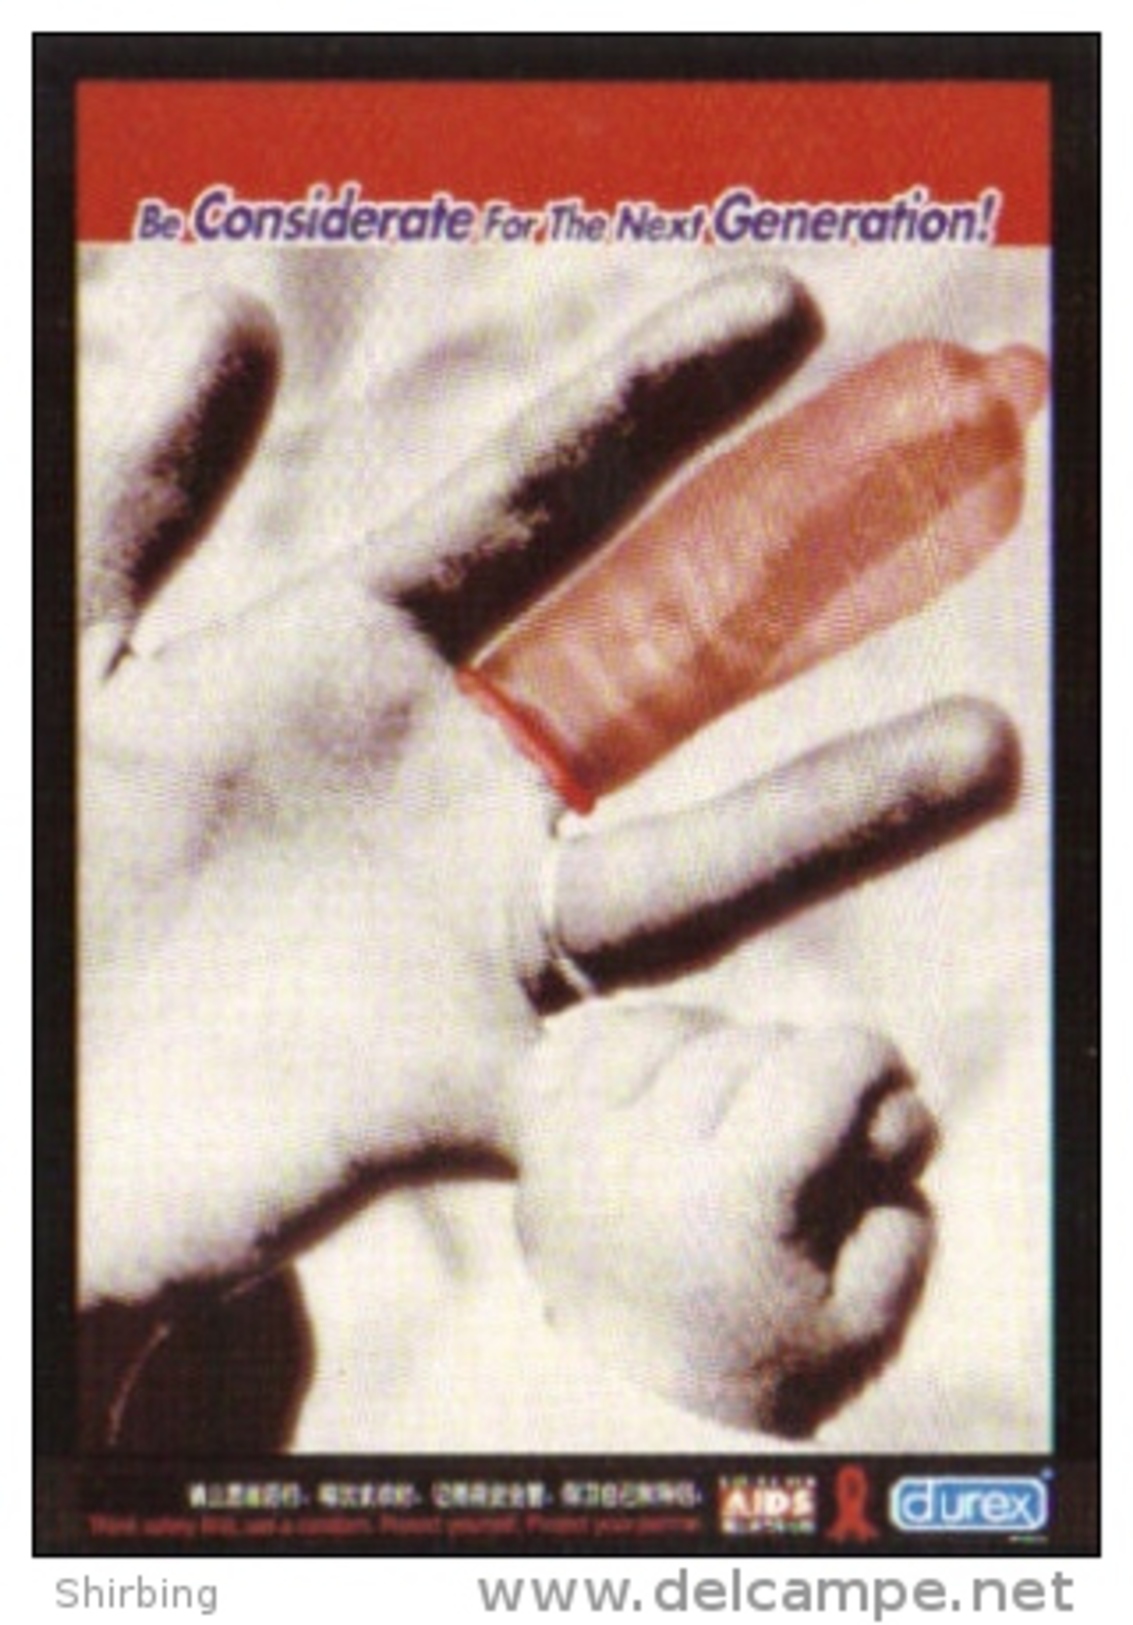 15V : Sex,Condom, Safe Sex Considerable For Next Generation,prevention HIV Aids, Durex Promo Card - Health